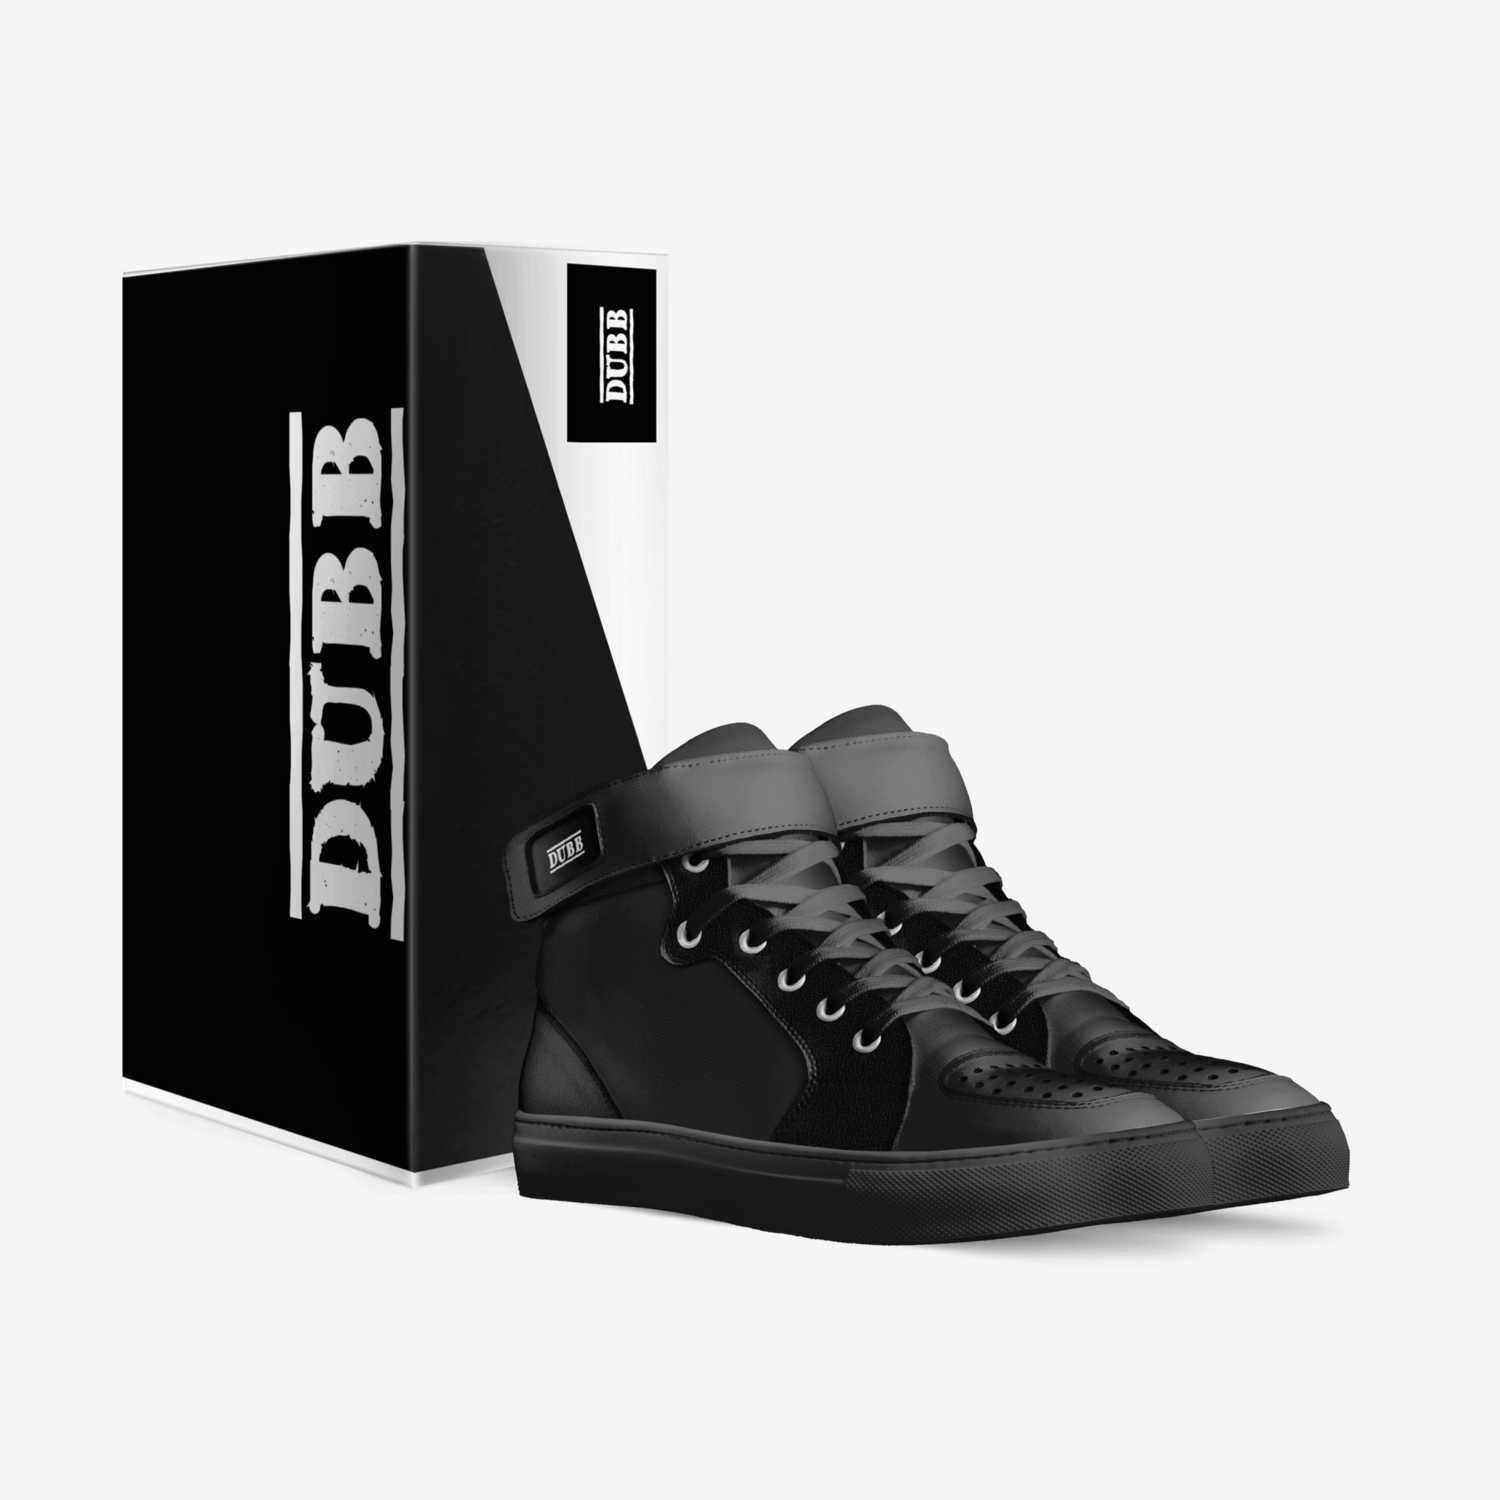 Dubb custom made in Italy shoes by Natasha Robinson | Box view